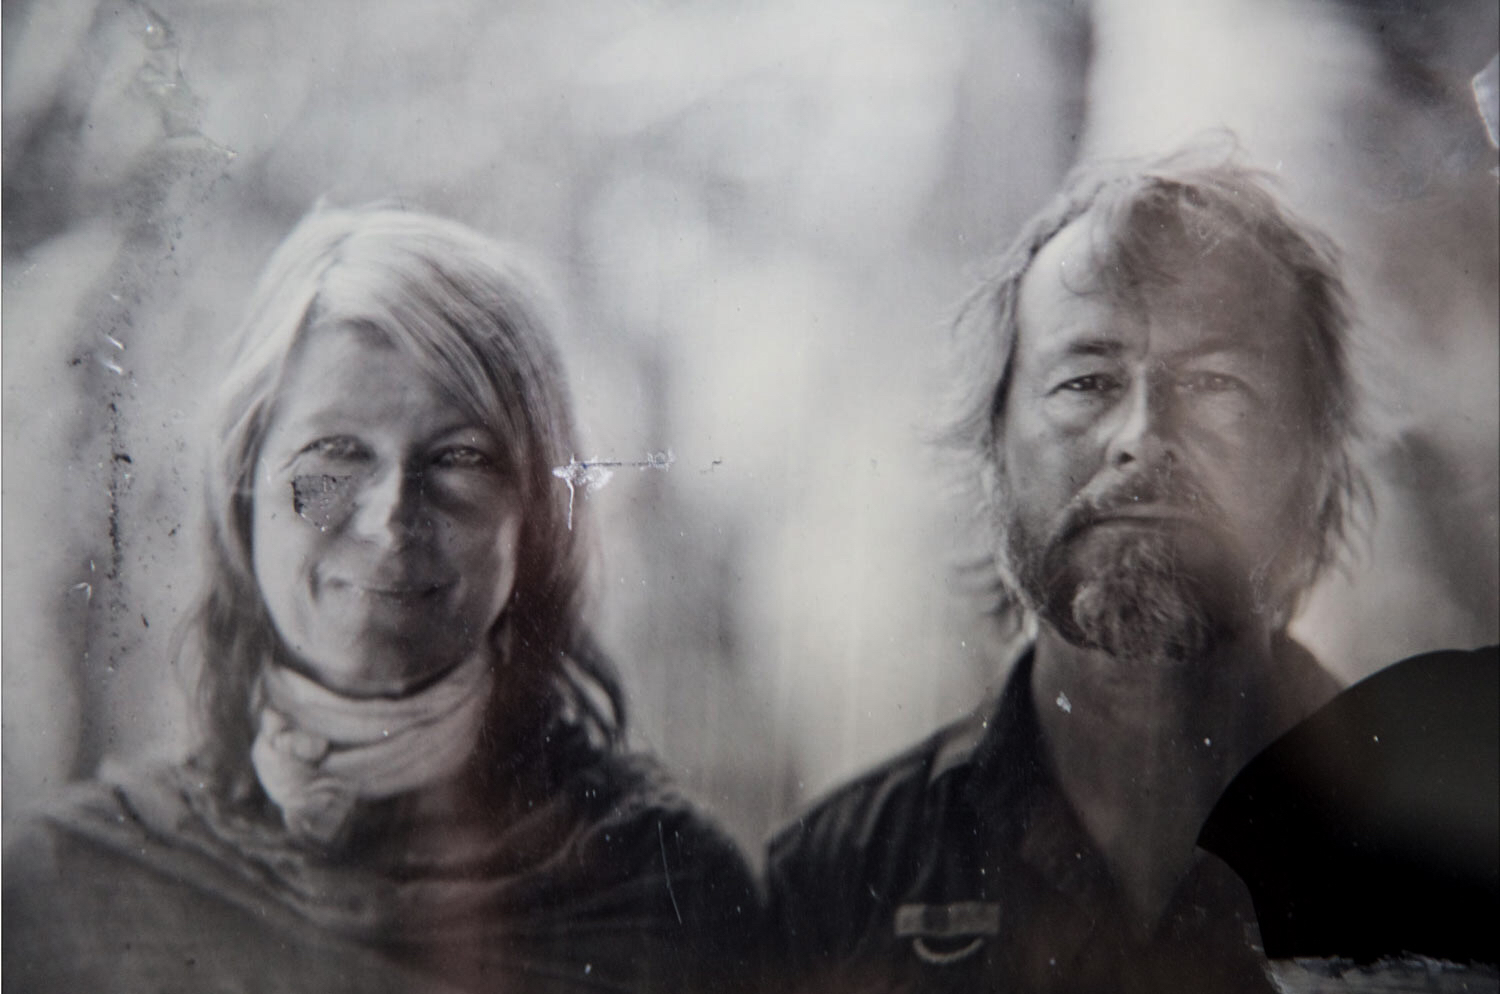 Helen Jones-Florio & Jason Florio - wet plate collodion print portrait courtesy of Marcin Andrzejewski